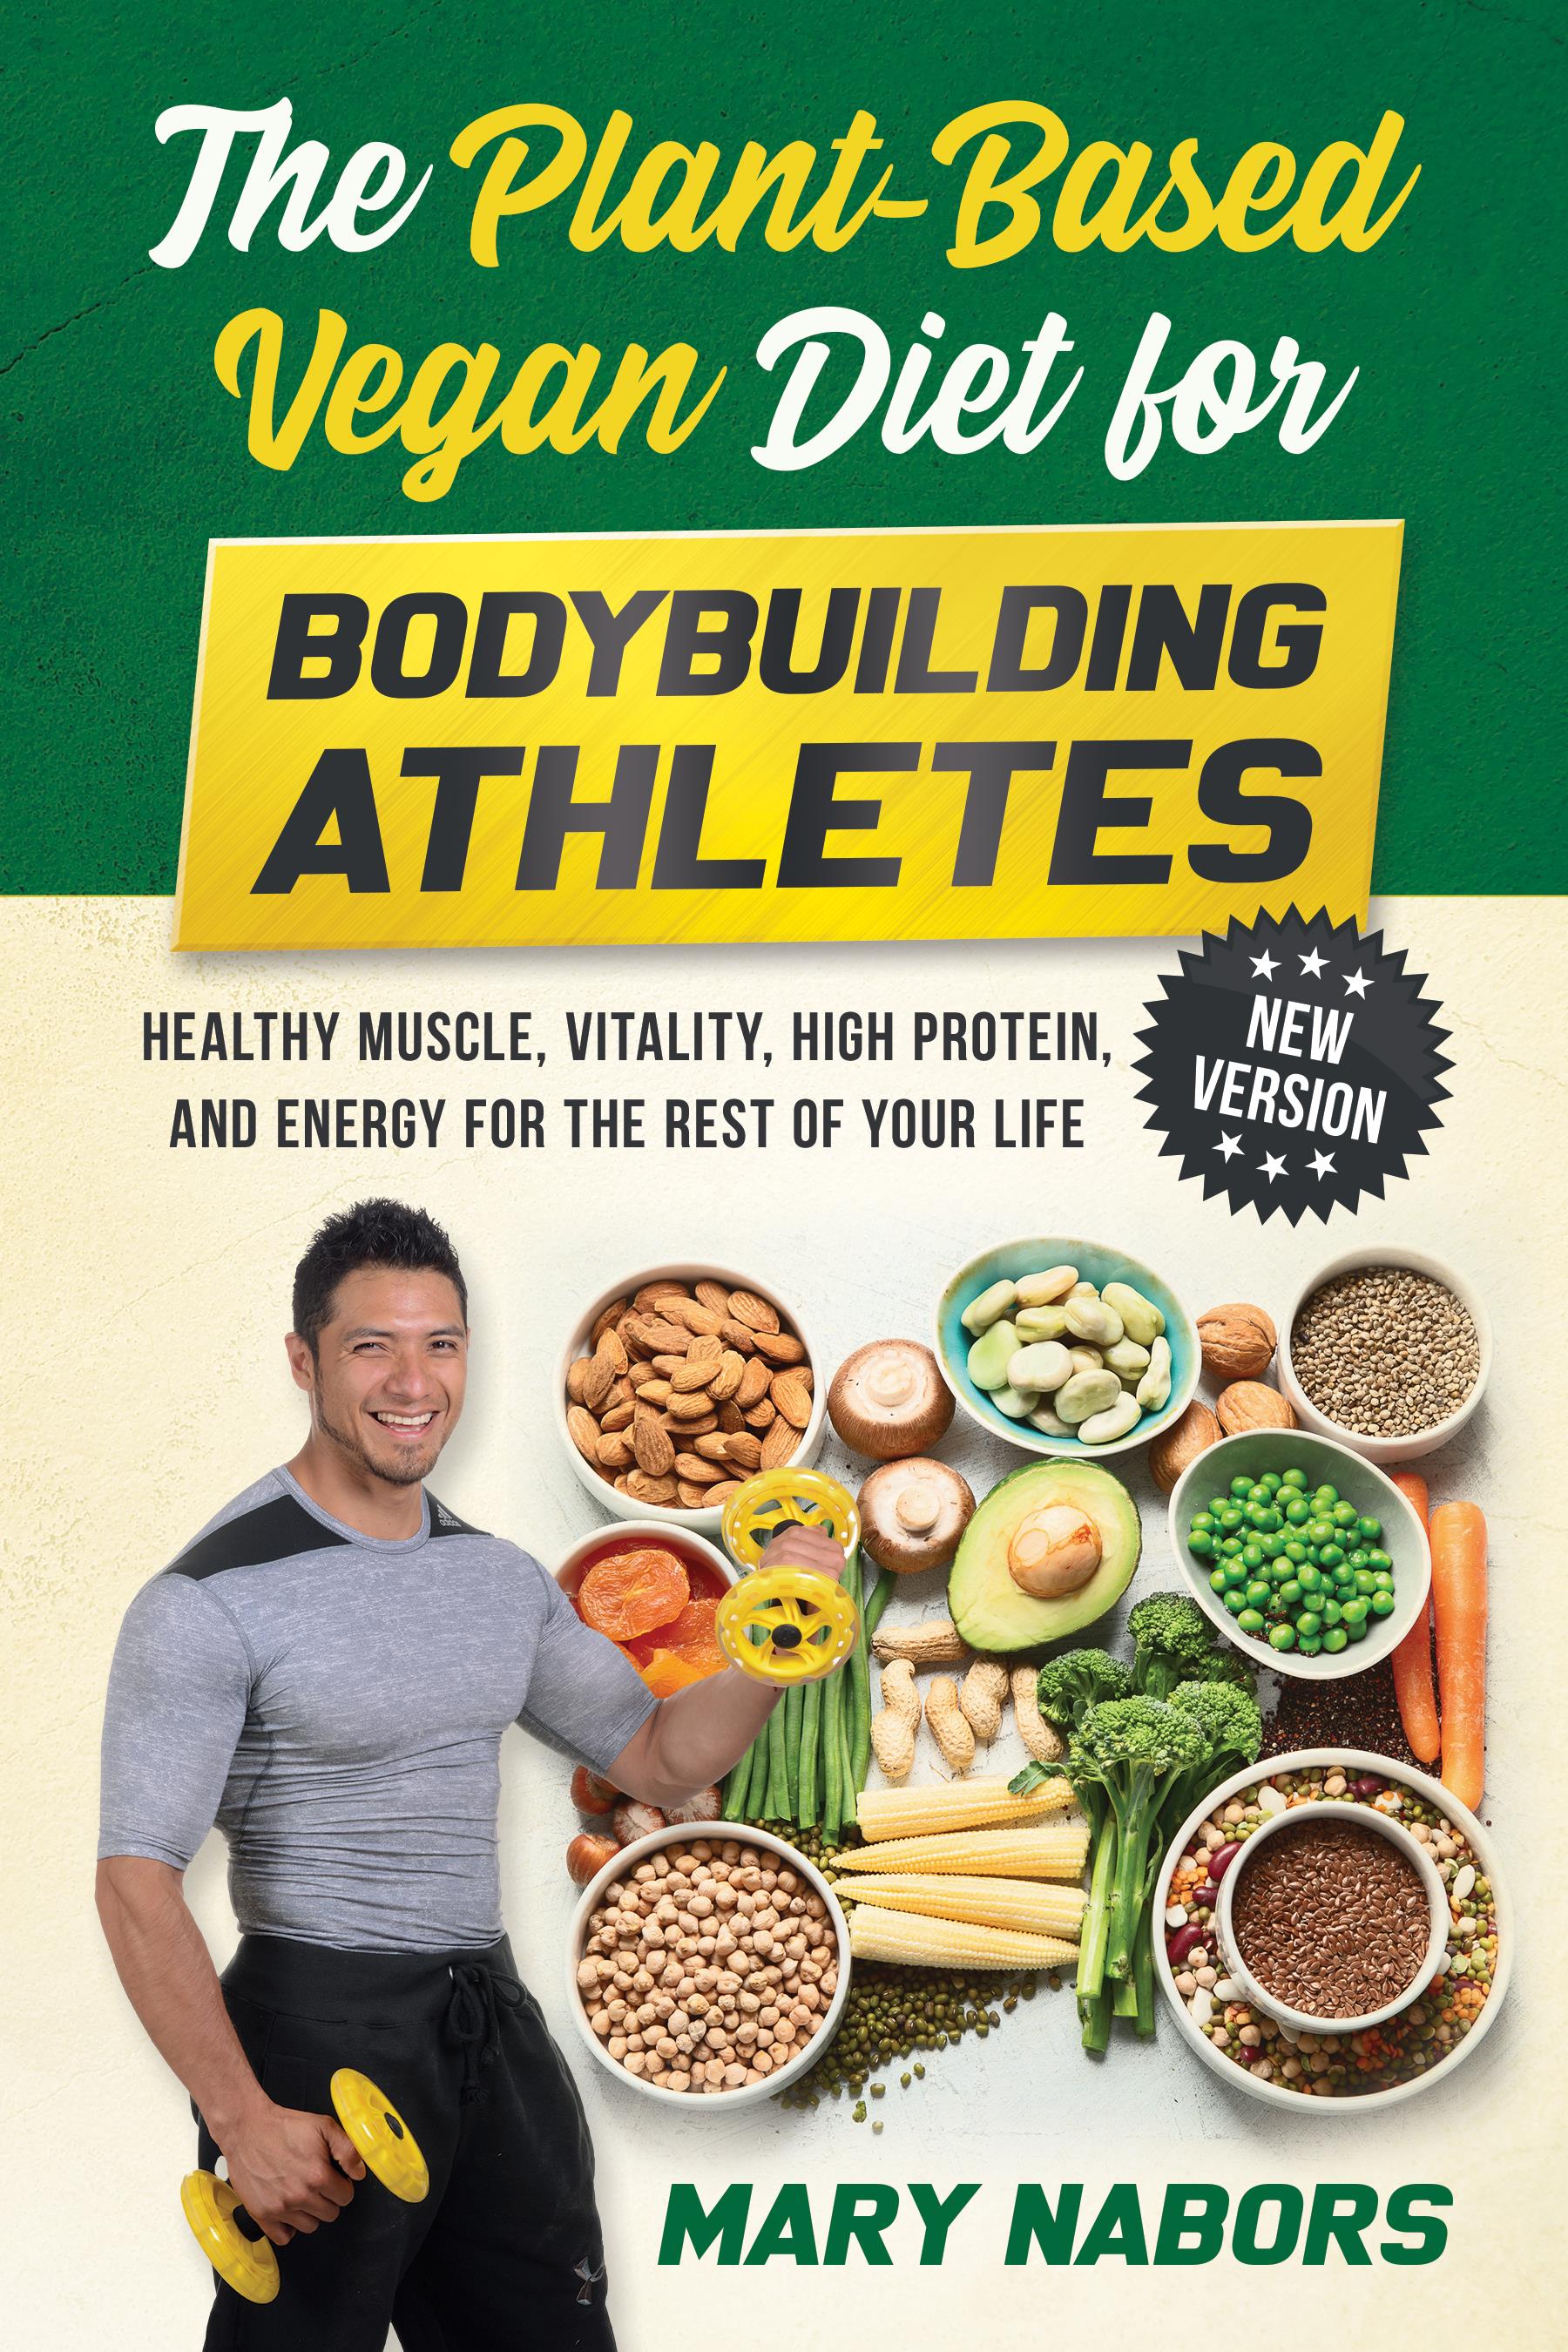 The Plant-Based Vegan Diet for Bodybuilding Athletes (NEW VERSION)